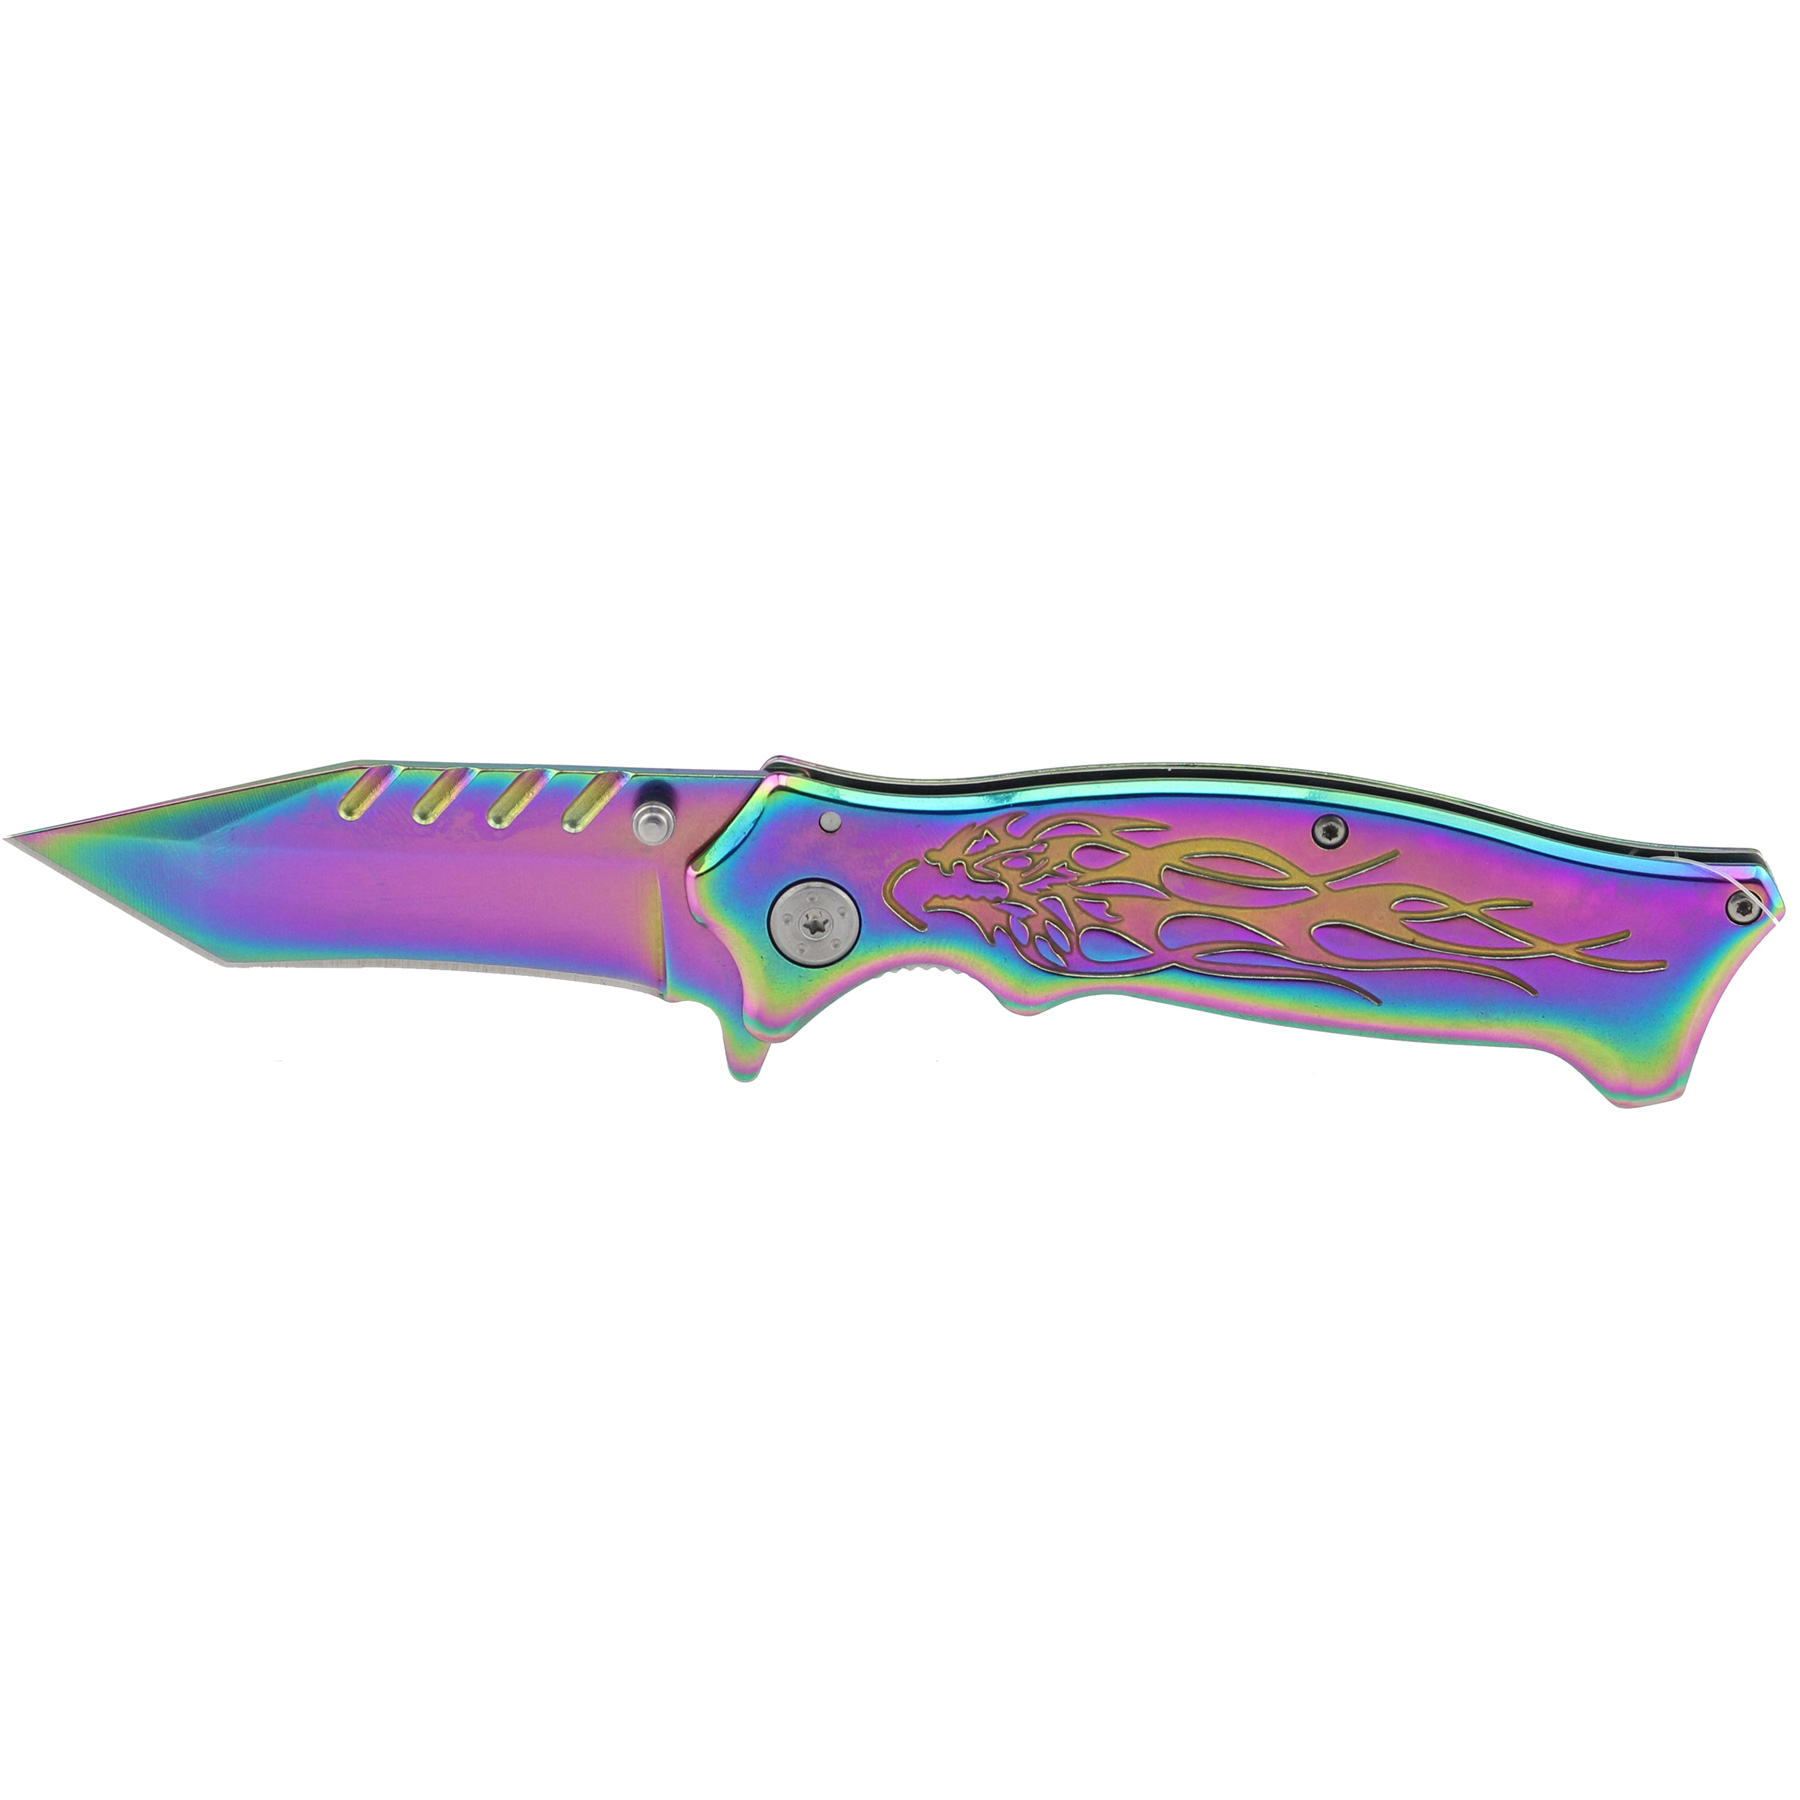 KNIFE EAGLE FLAME 4.75